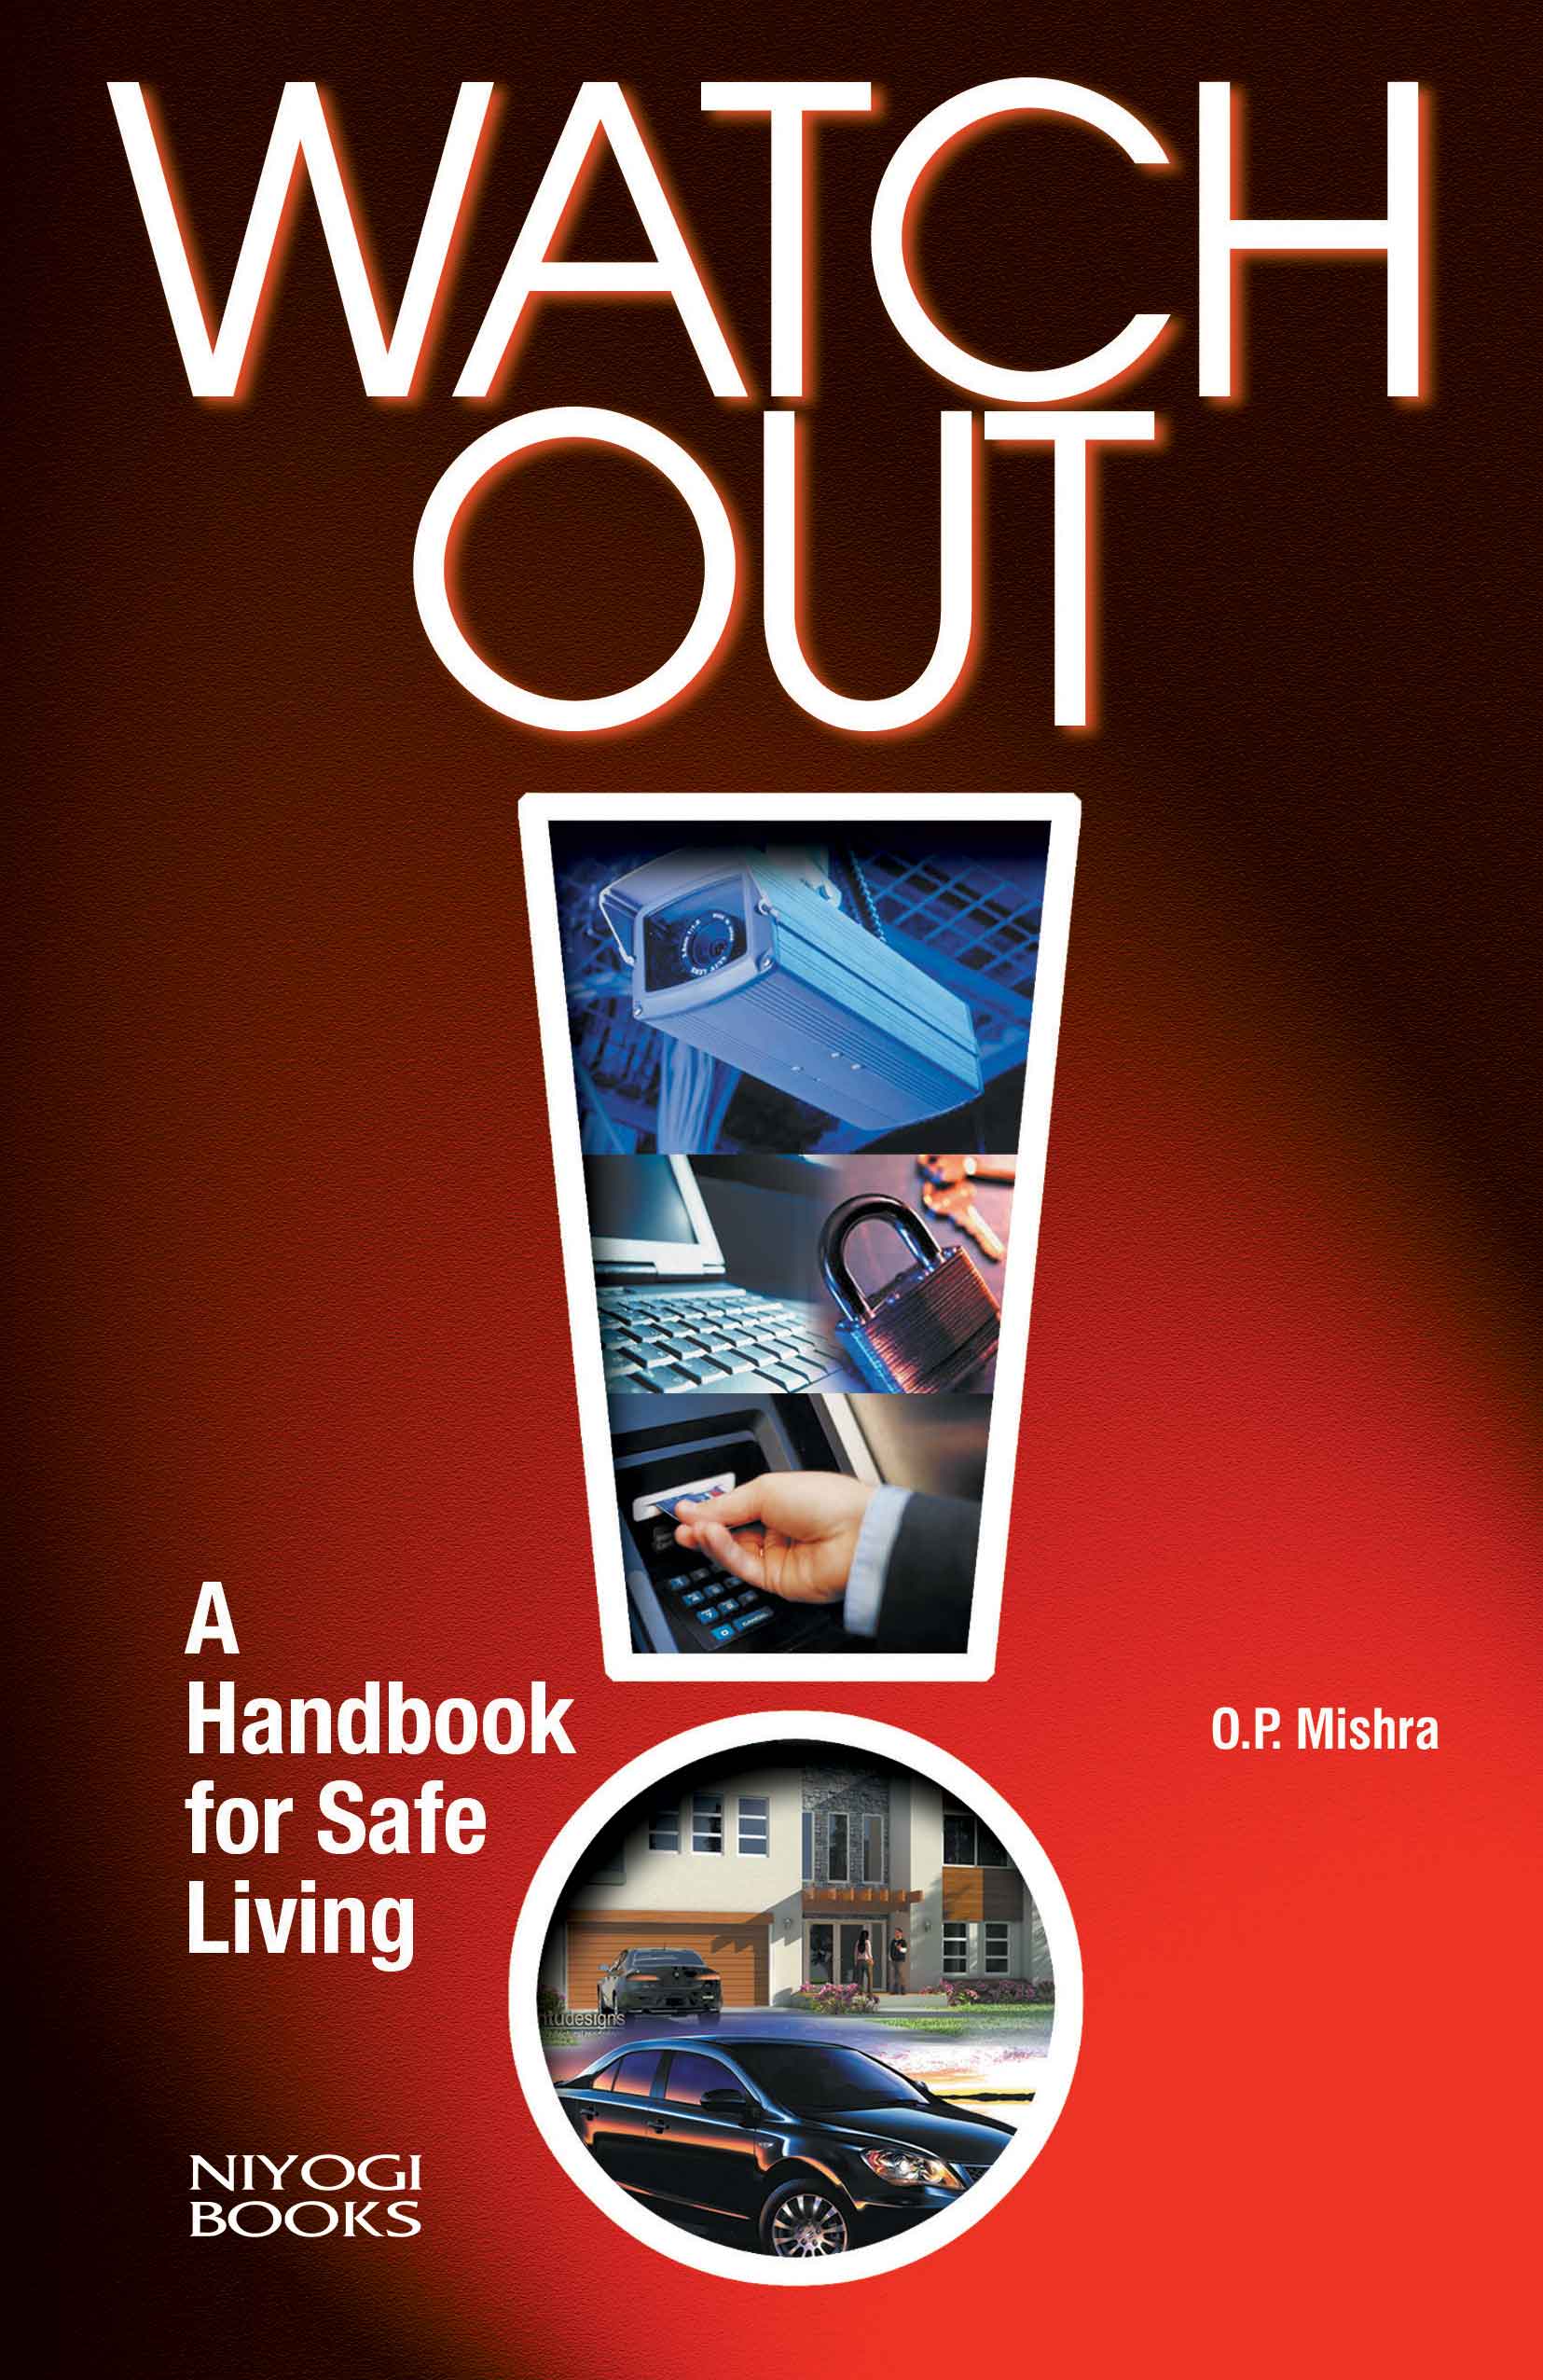 Watch Out! : A Handbook for Safe Living Book